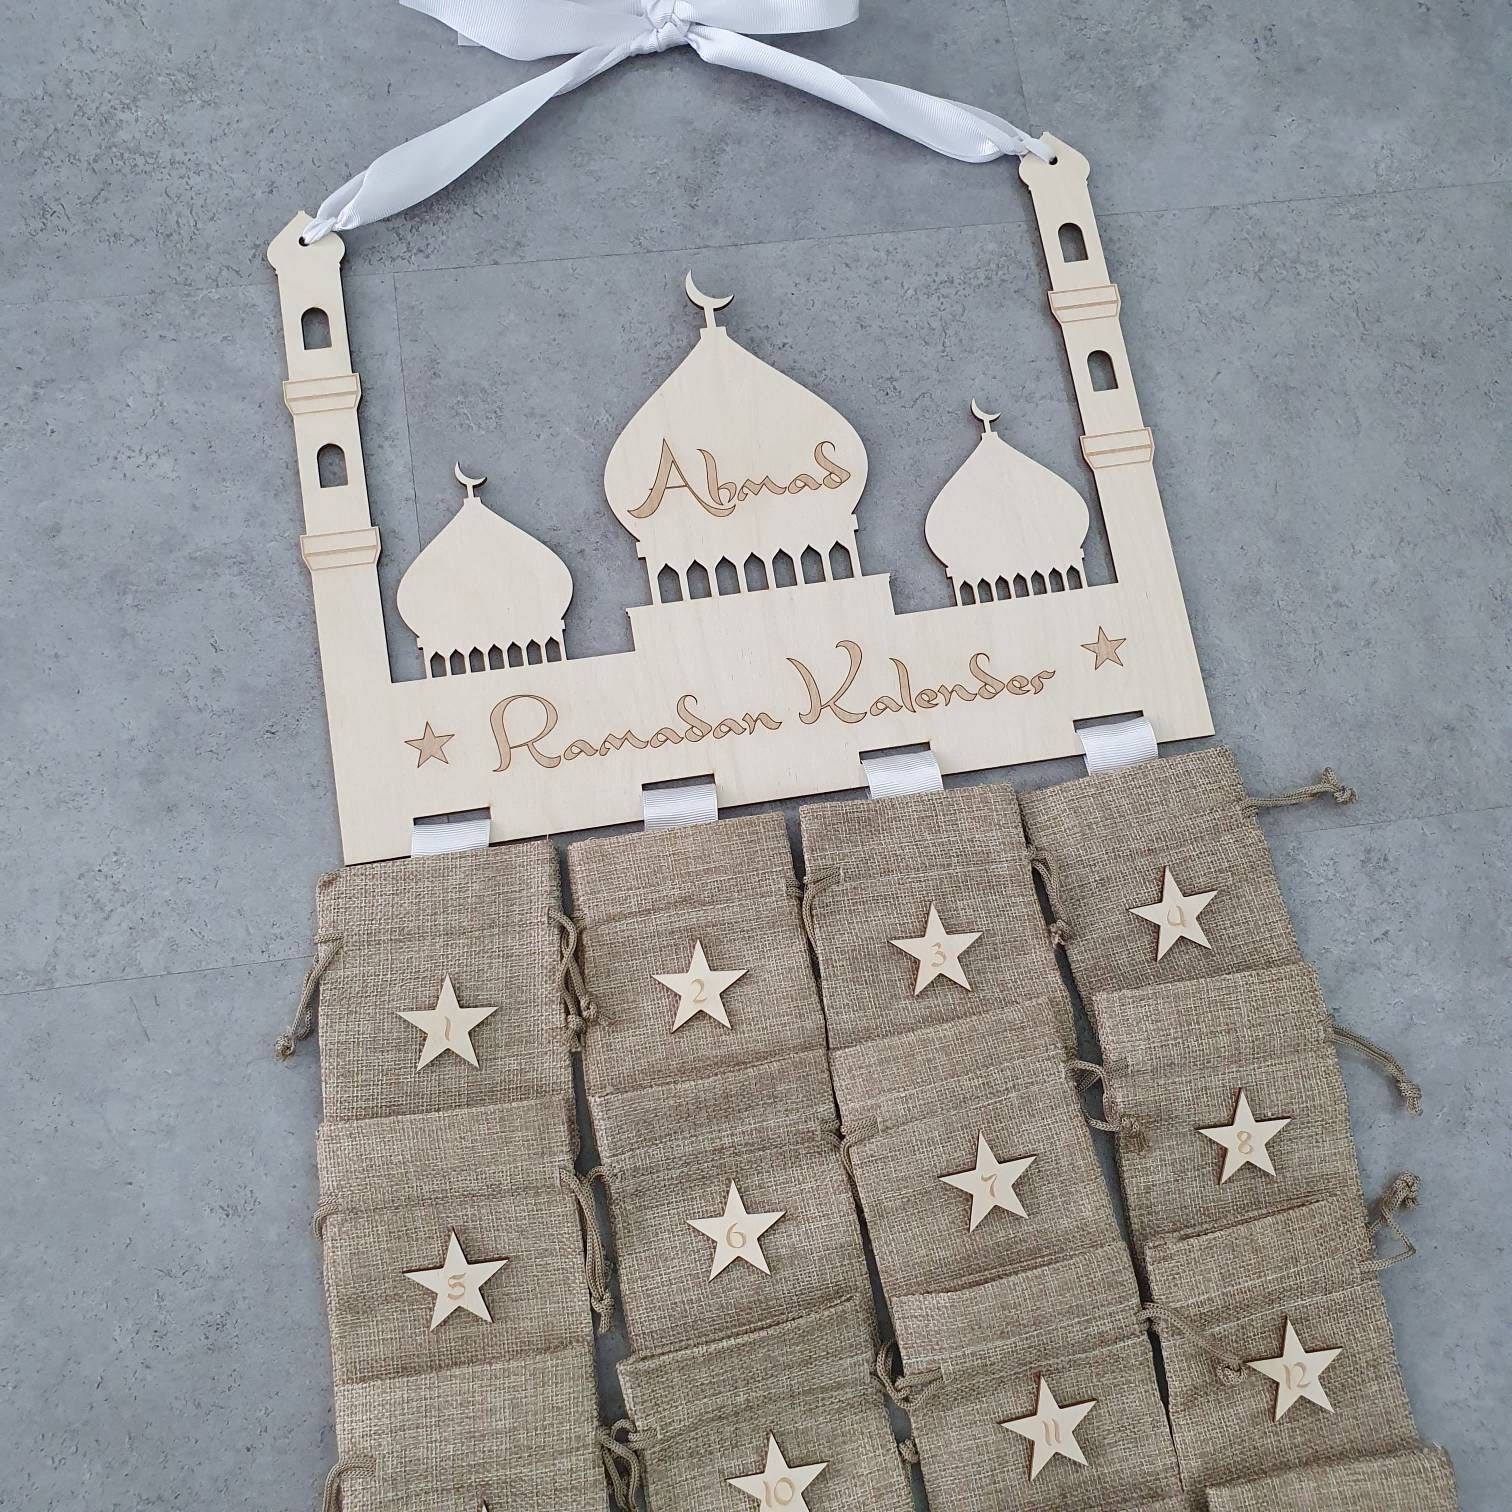 Ramadan Calendar Personalized for Children 